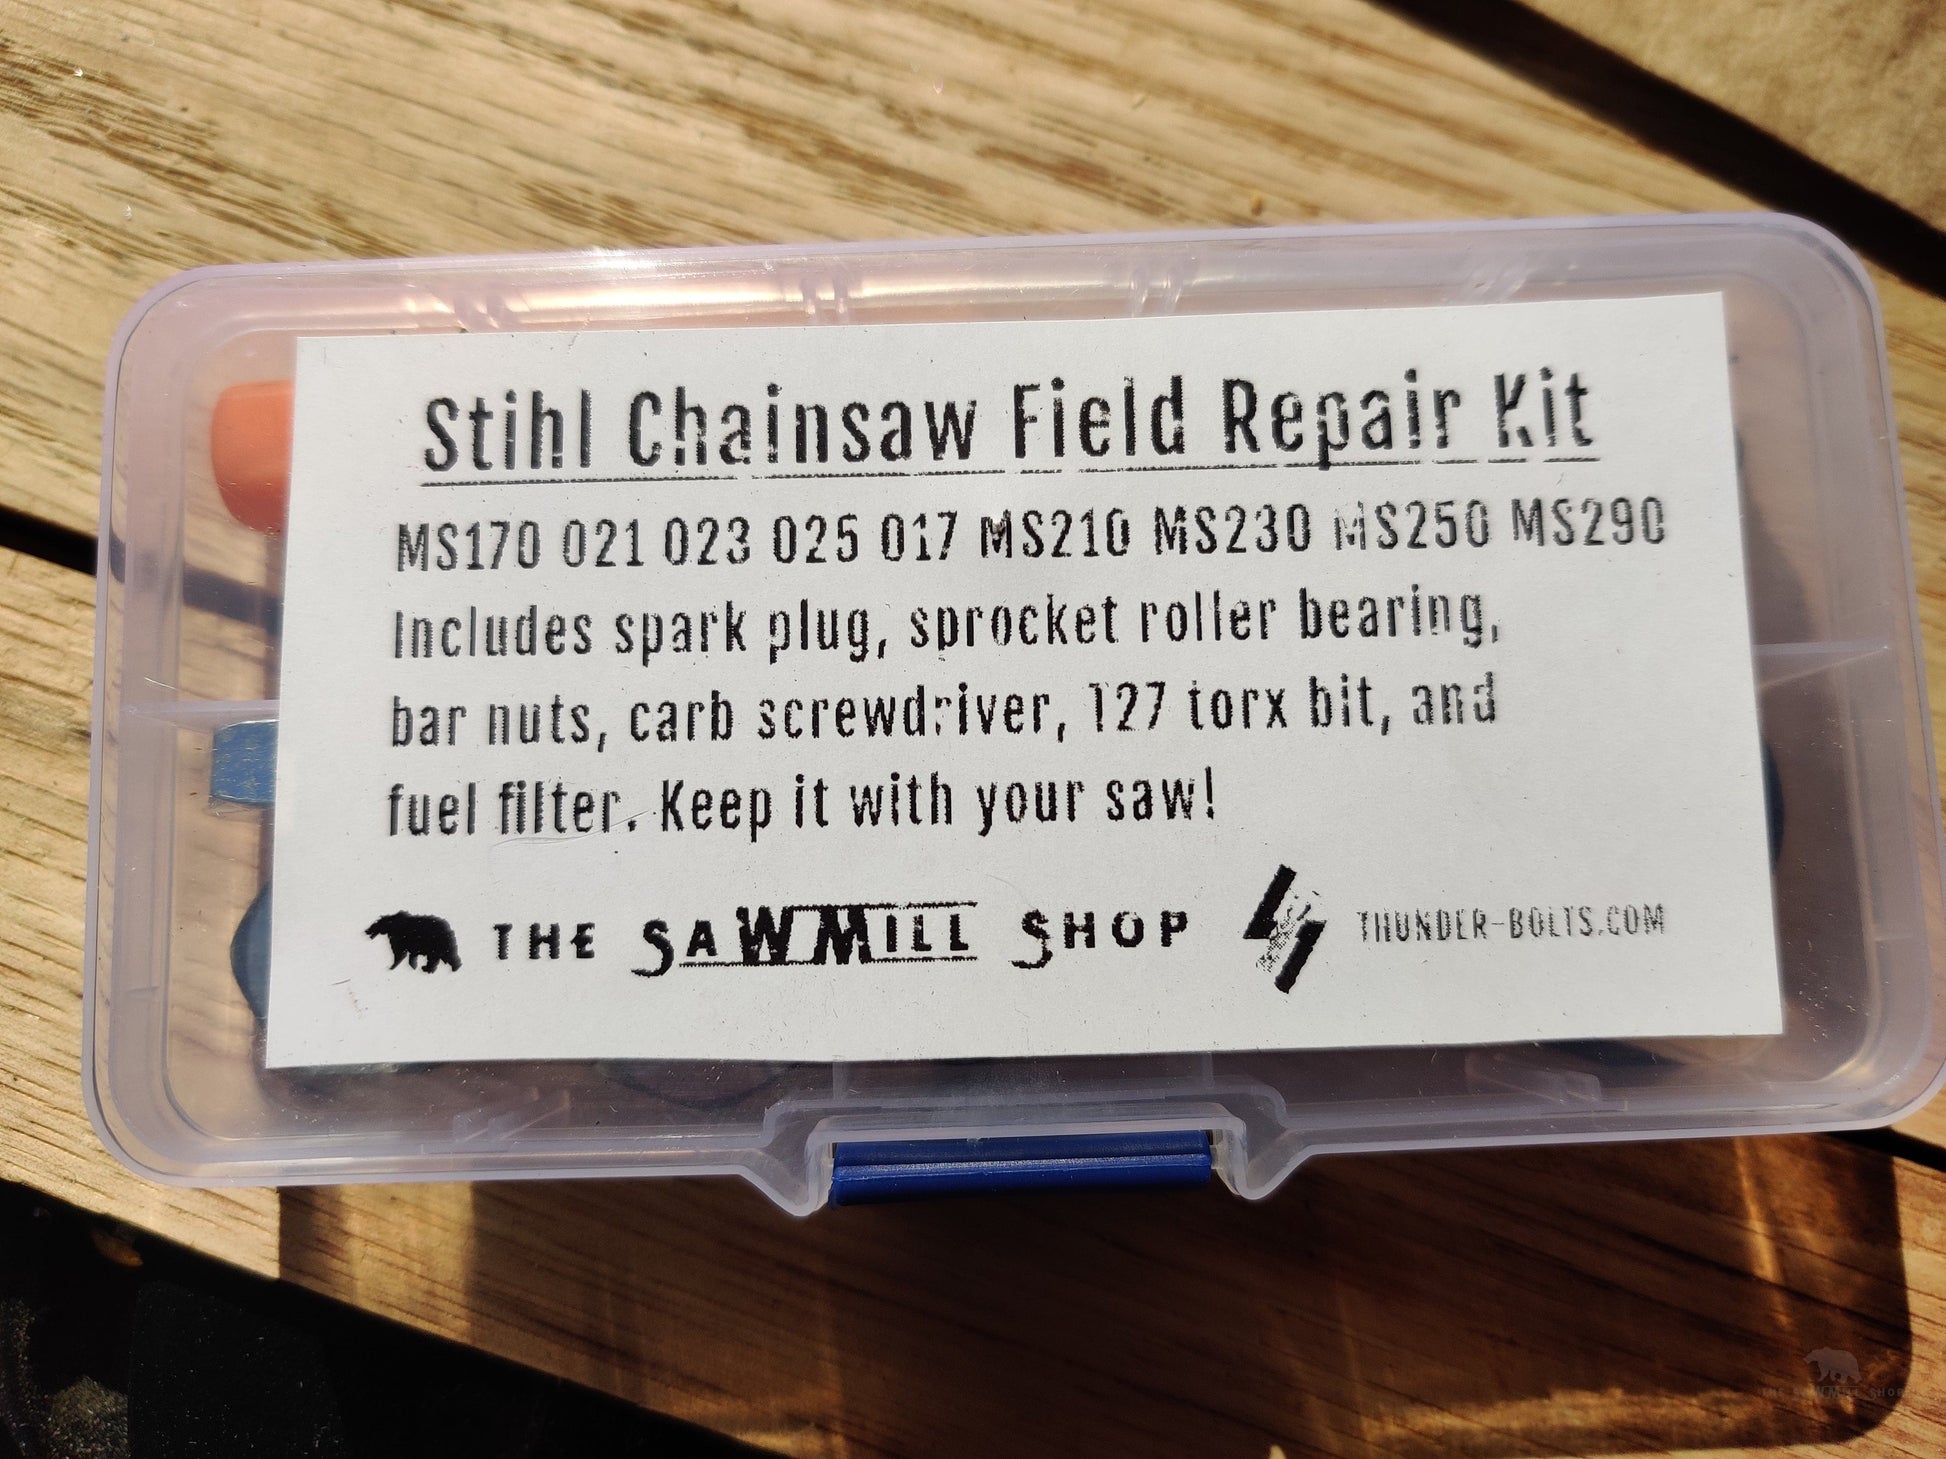 Stihl Chainsaw Field Repair Kit MS170 - MS290-The Sawmill Shop